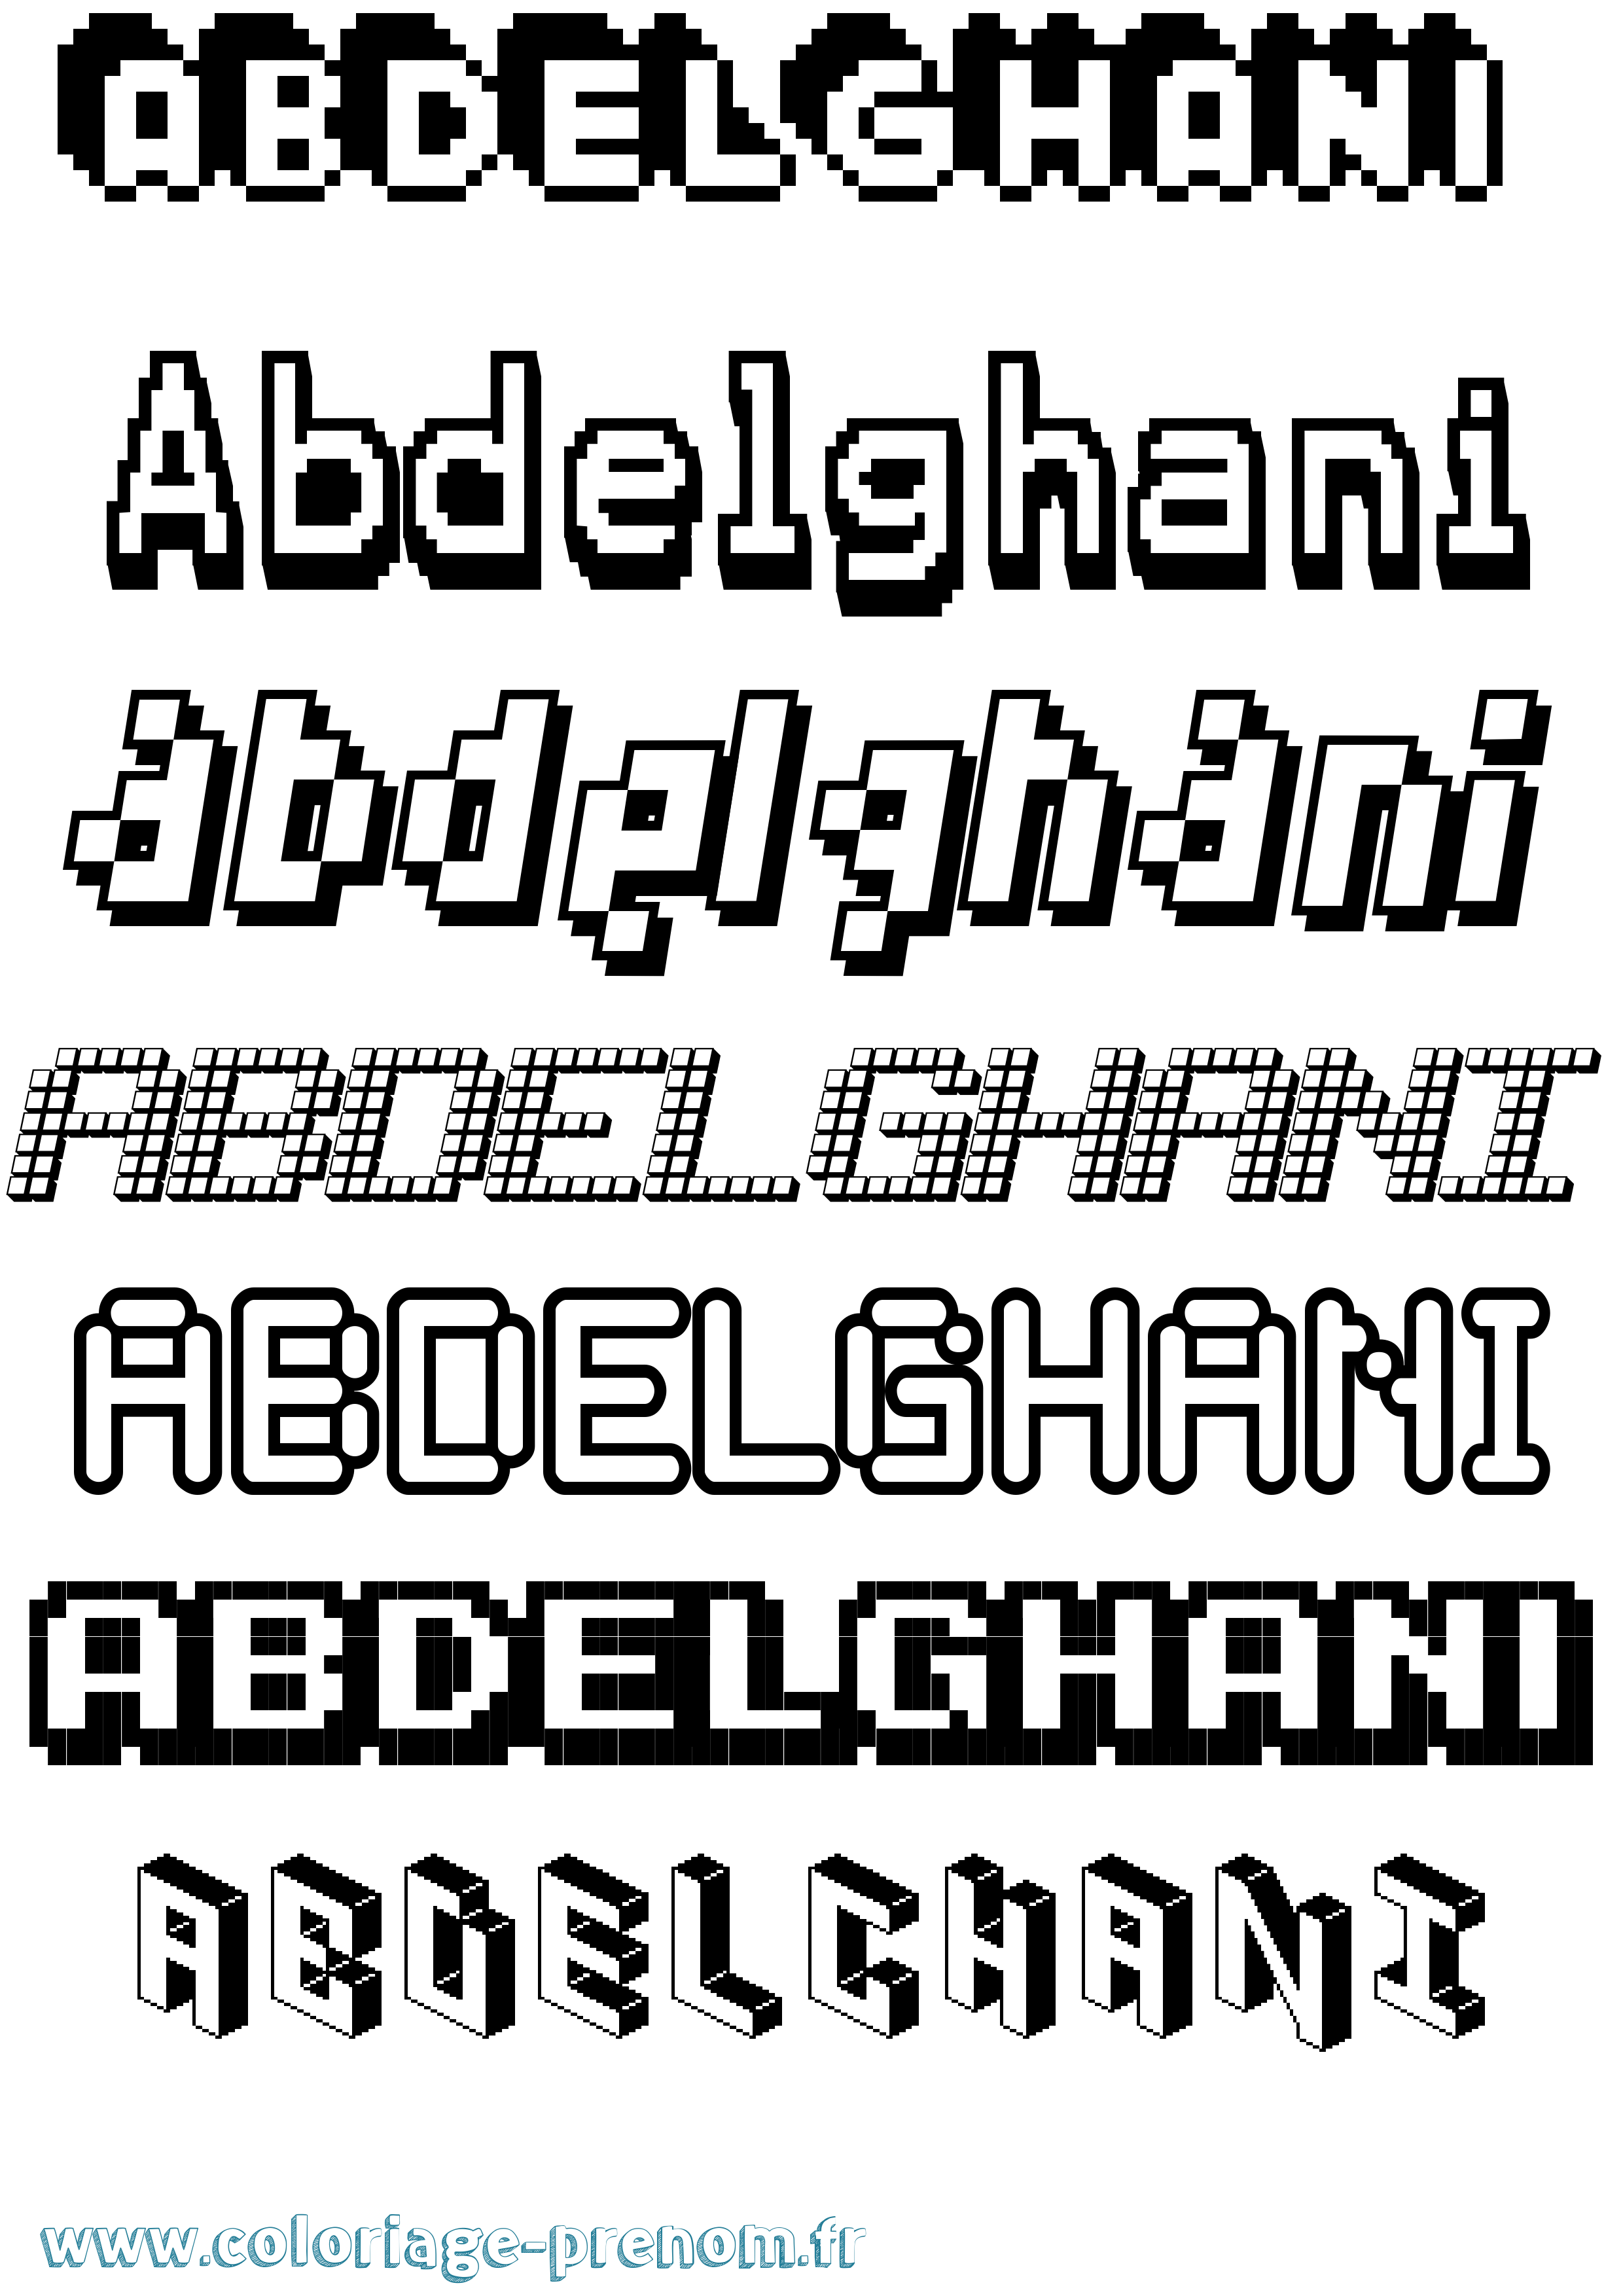 Coloriage prénom Abdelghani Pixel